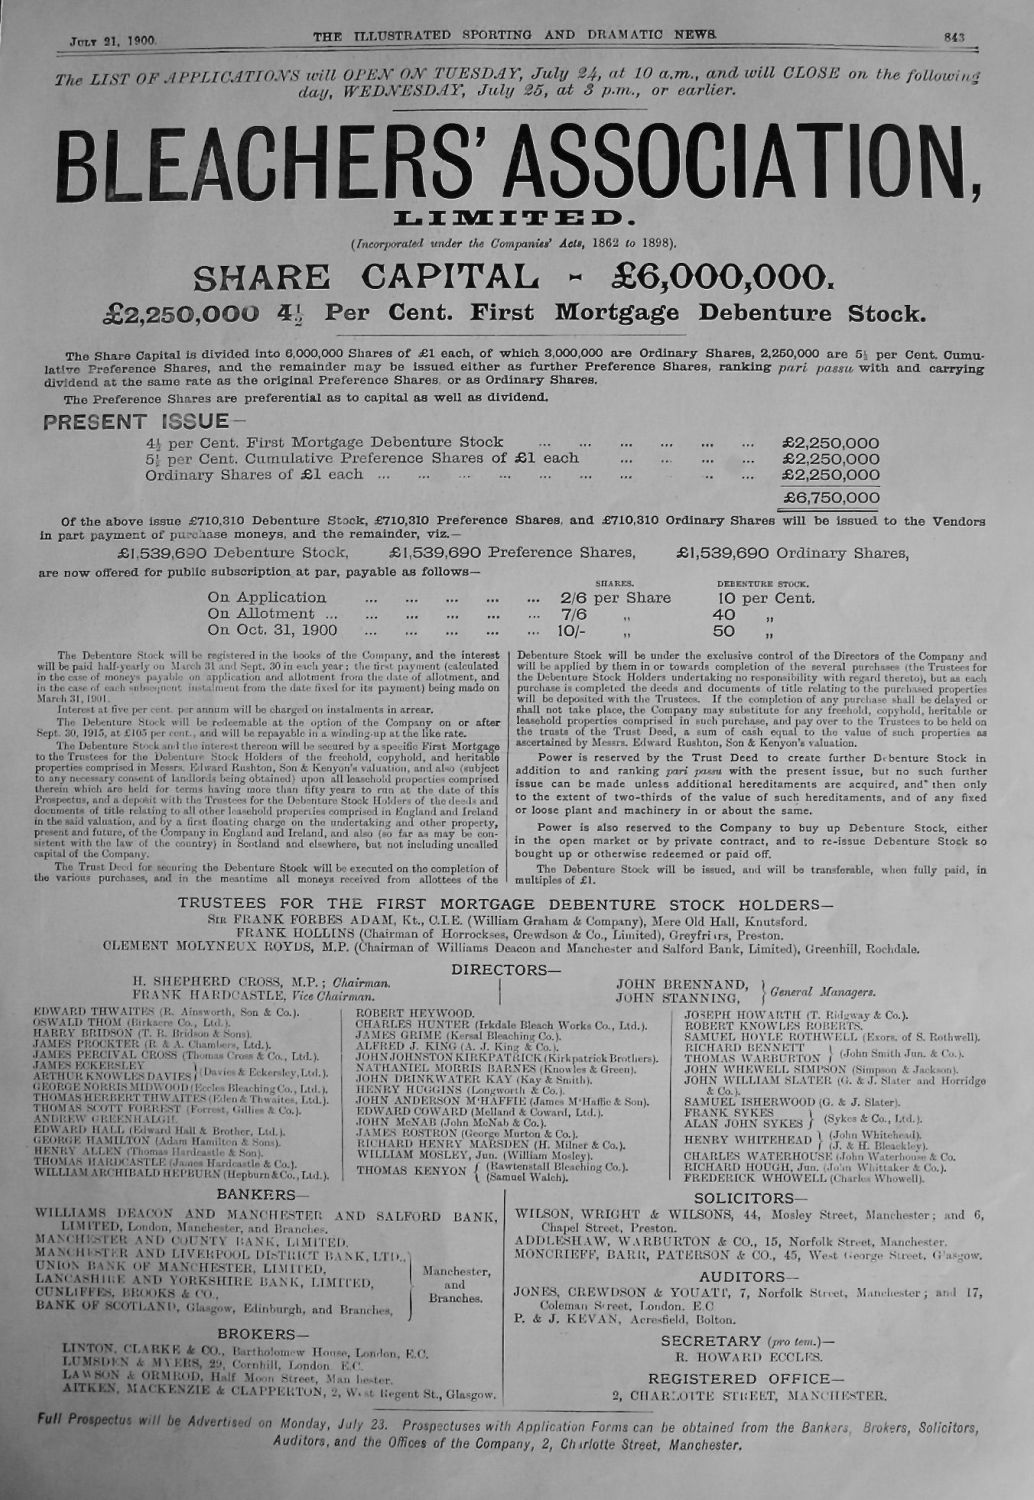 Bleachers' Association Limited. (Raising of Share Capital).  1900.